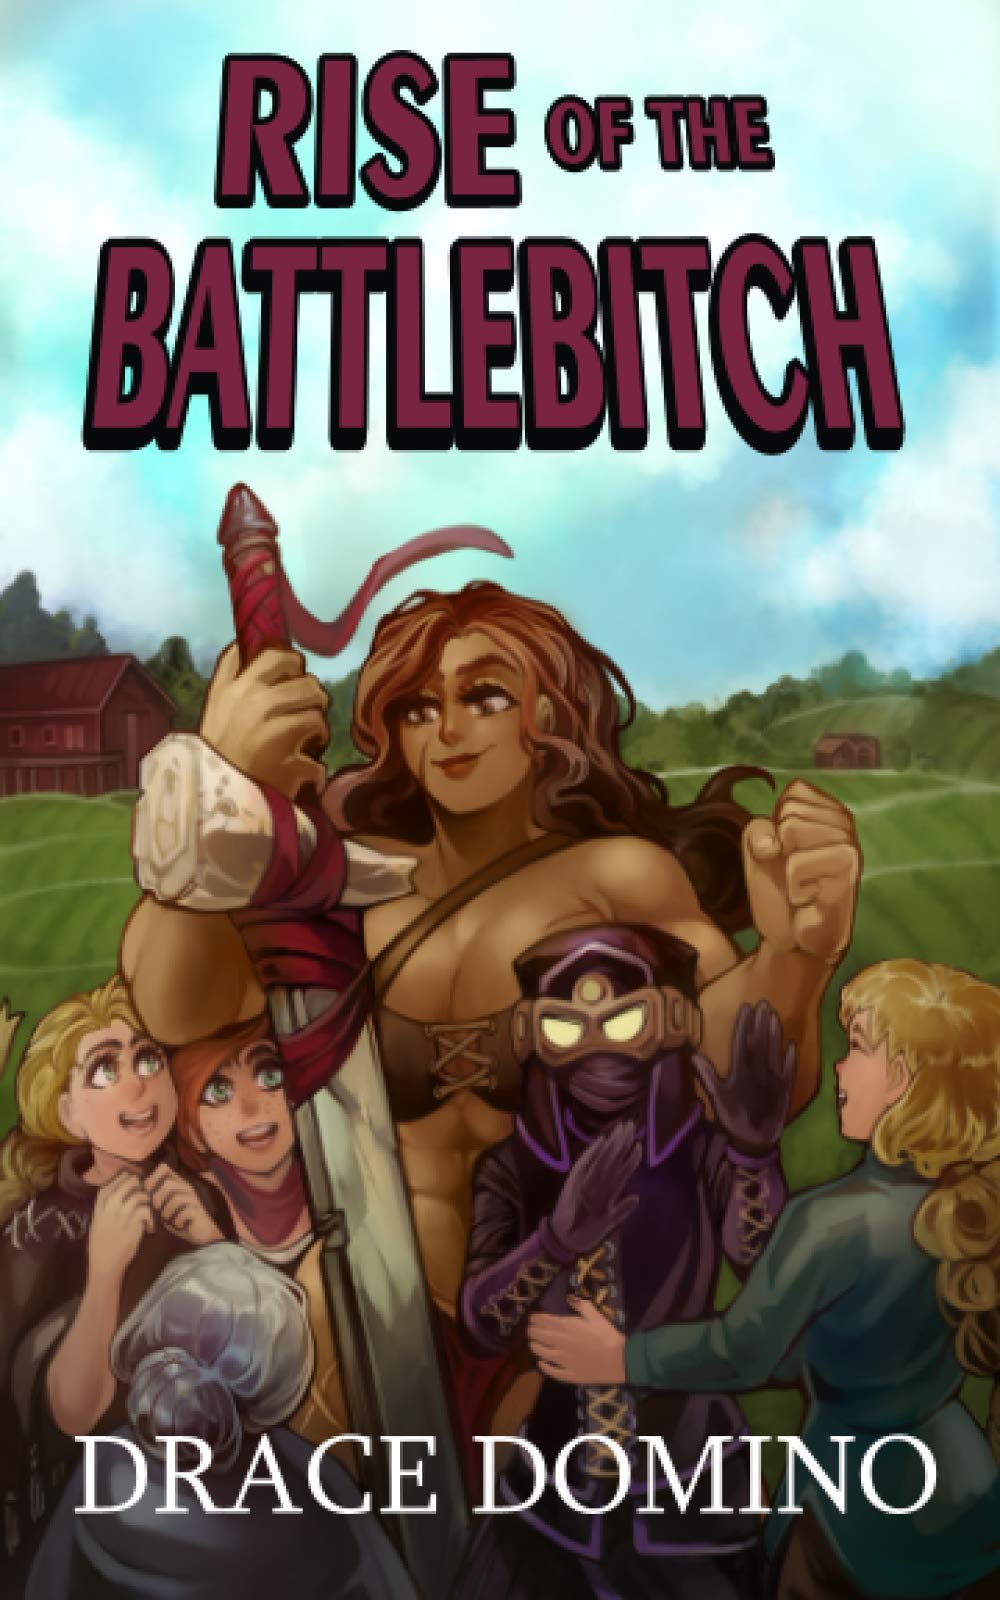 Book Review: Rise of the Battlebitch by Drace Domino (erotic fantasy, futa, lesbian)